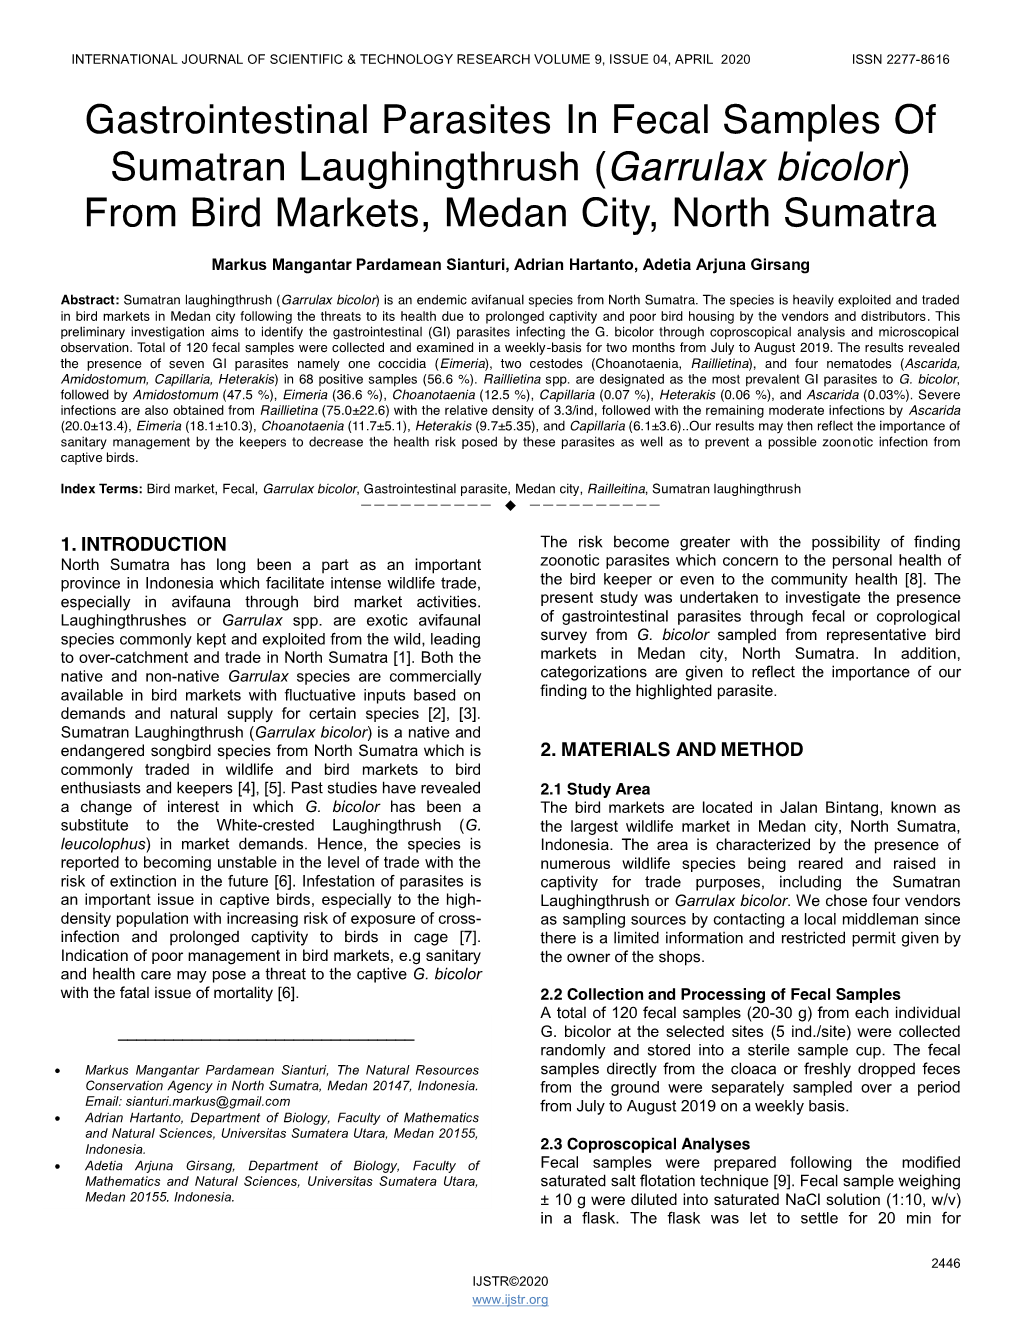 Gastrointestinal Parasites in Fecal Samples of Sumatran Laughingthrush (Garrulax Bicolor) from Bird Markets, Medan City, North Sumatra